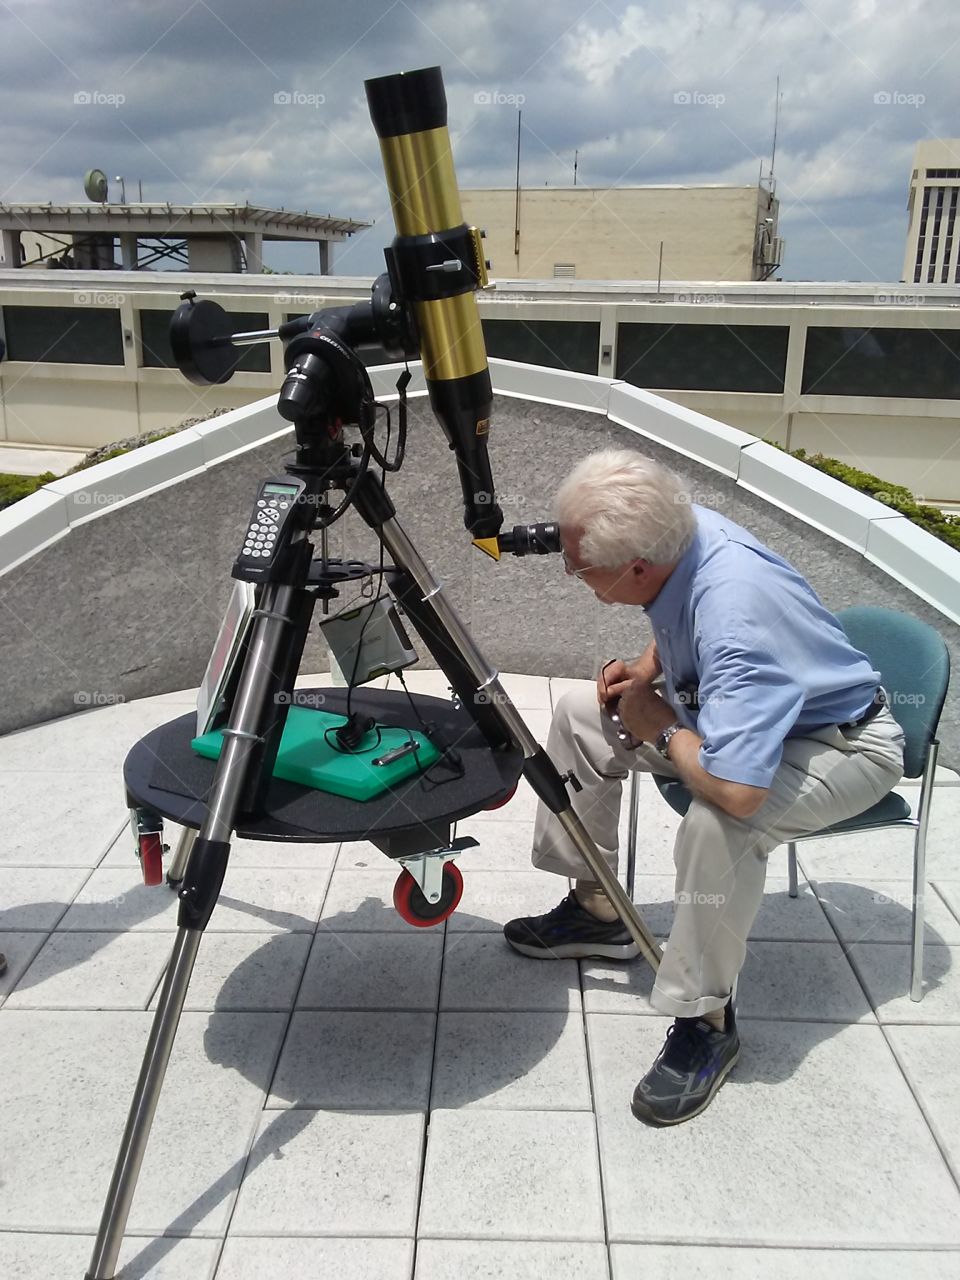 Viewing the sun through a refracting telescope